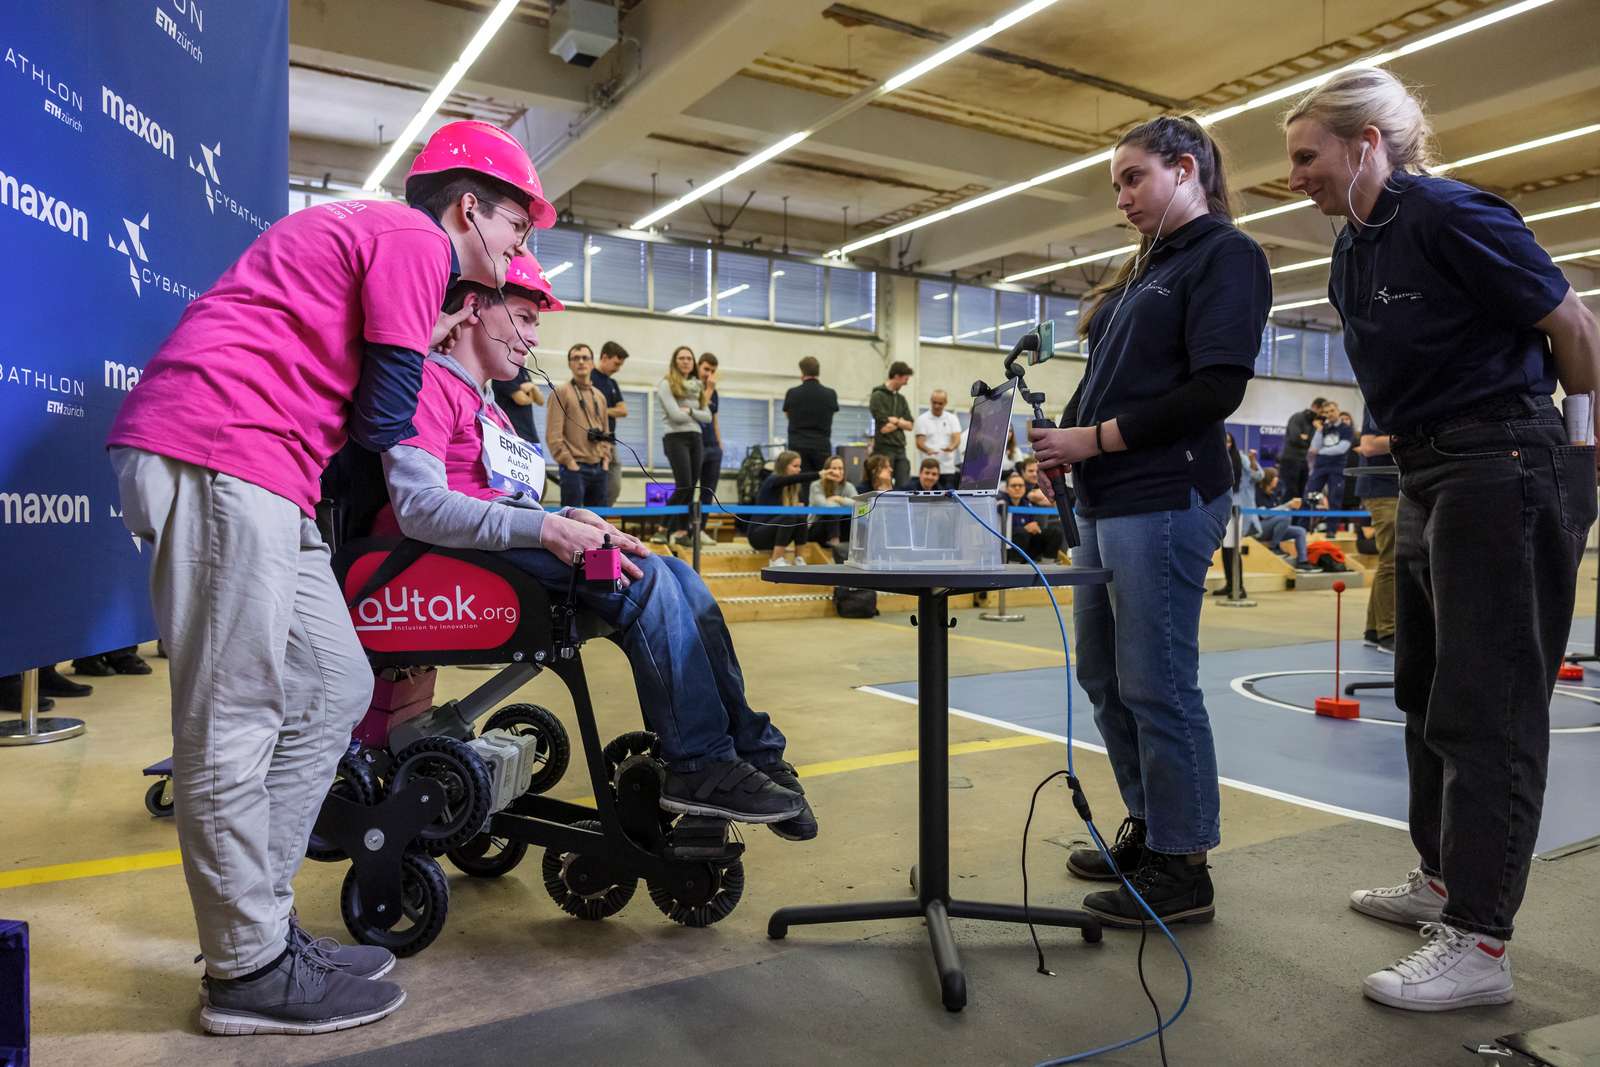 WHL – Wheelchair Race